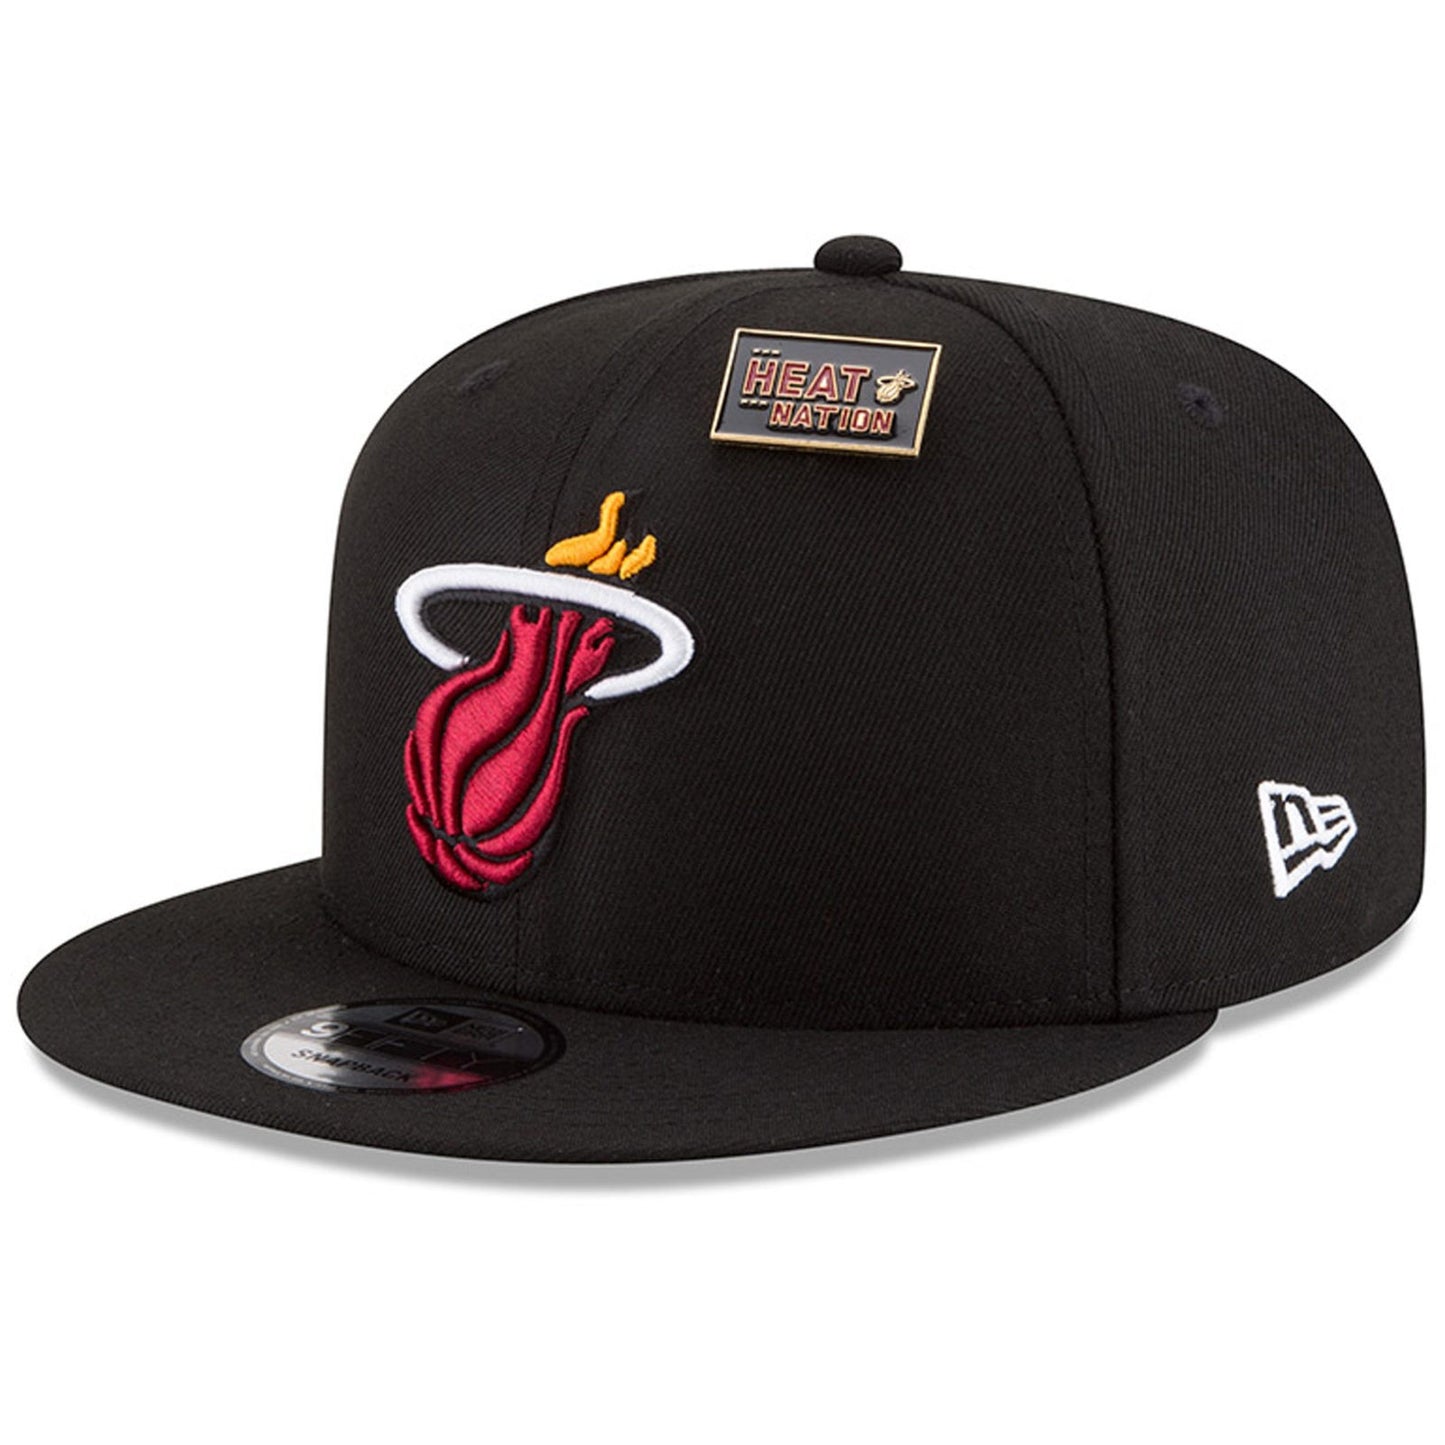 Miami Heat New Era 2018 Draft 9FIFTY Snapback Adjustable Hat – Black